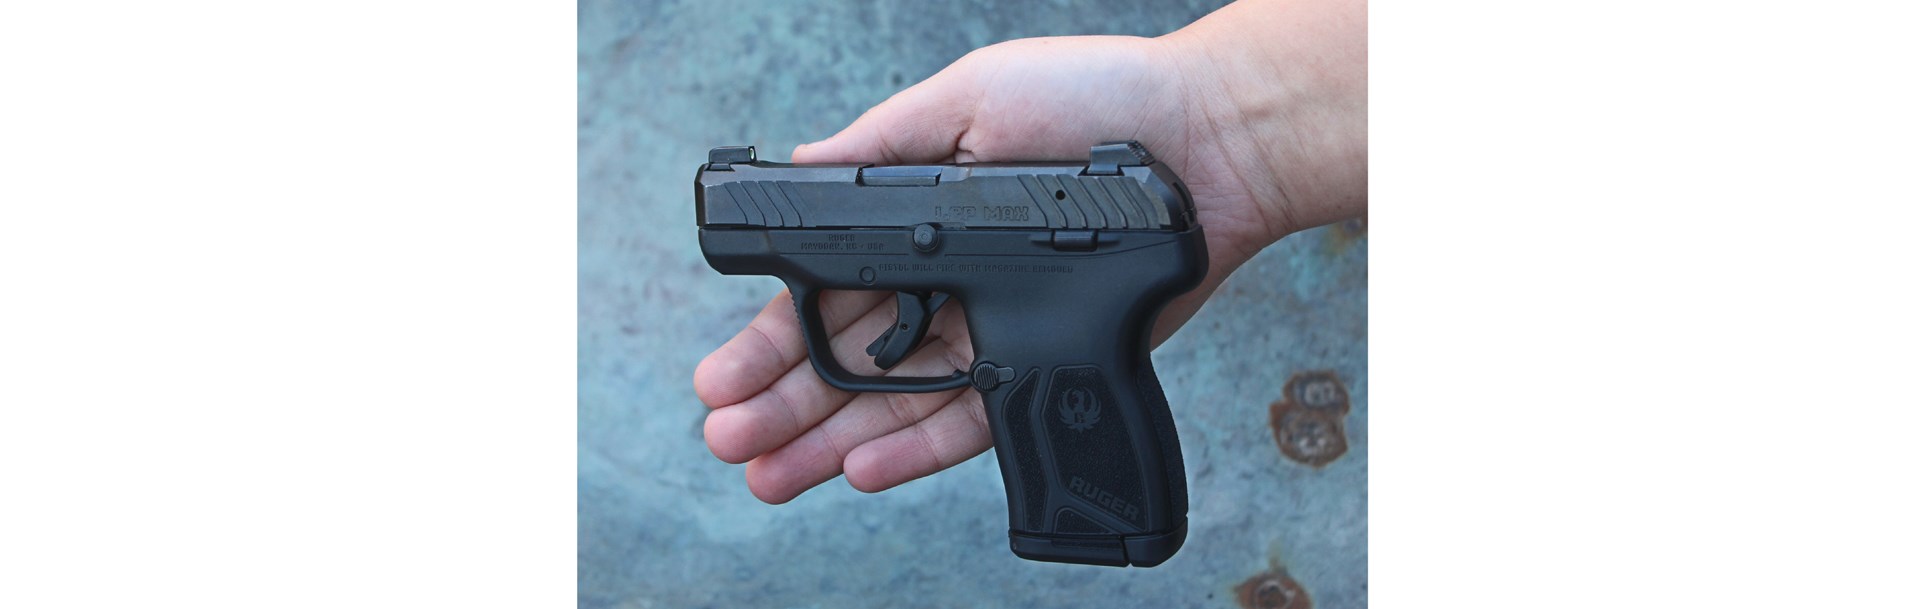 Ruger LCP MAX pistol in hand black gun smallest